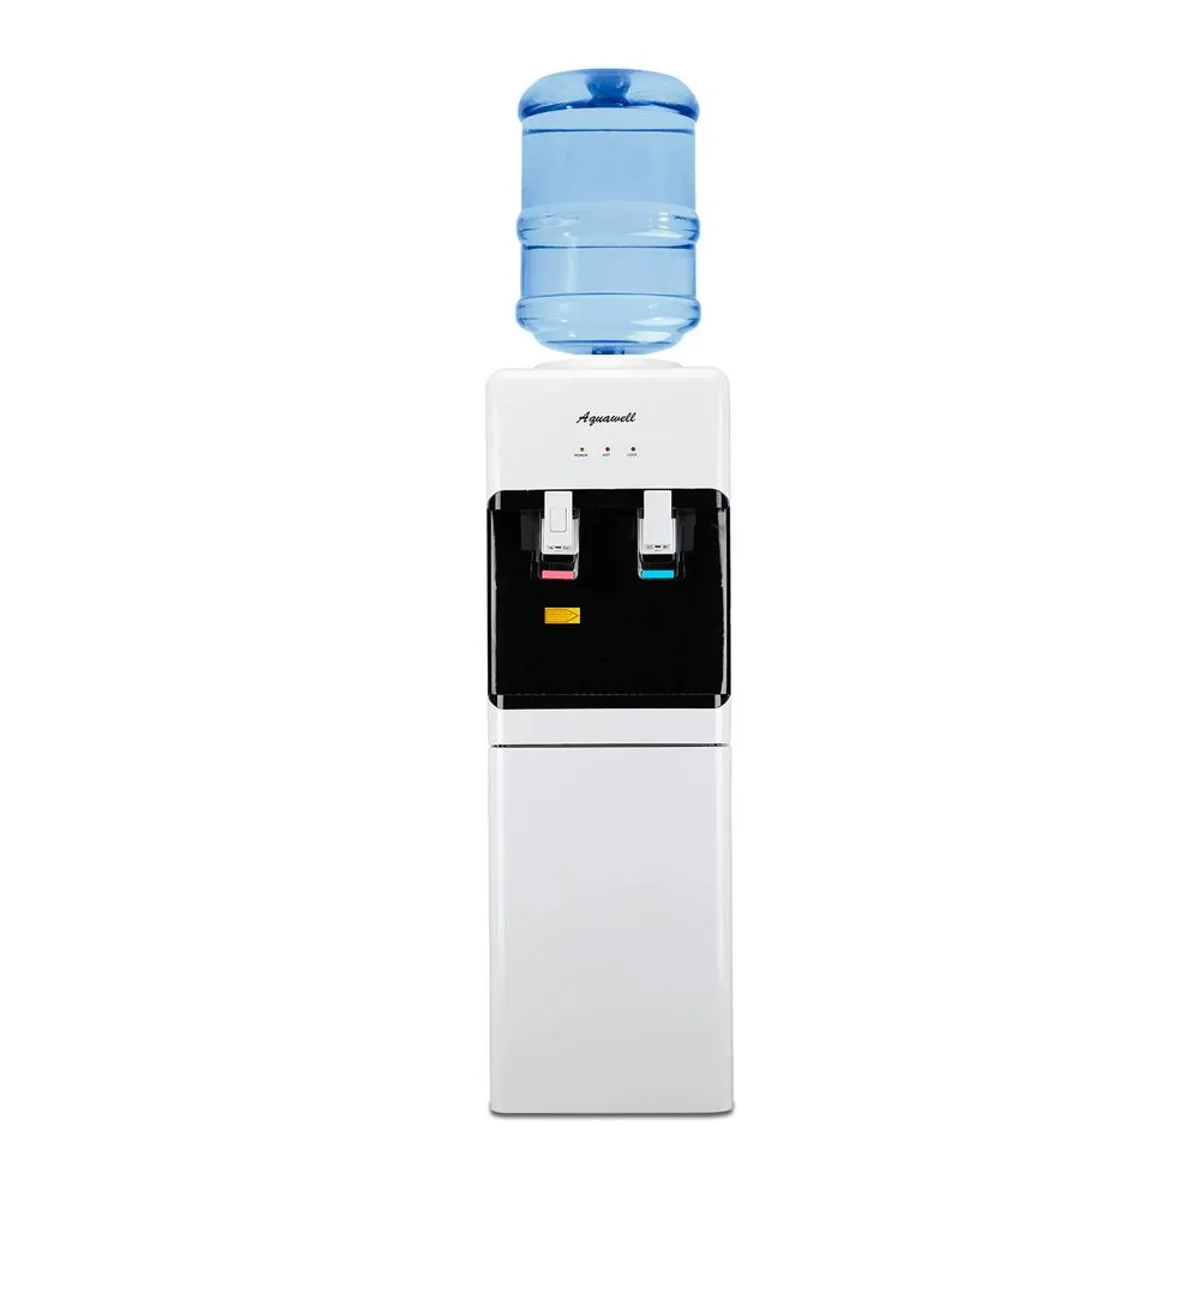 Aquawell Water Dispenser review